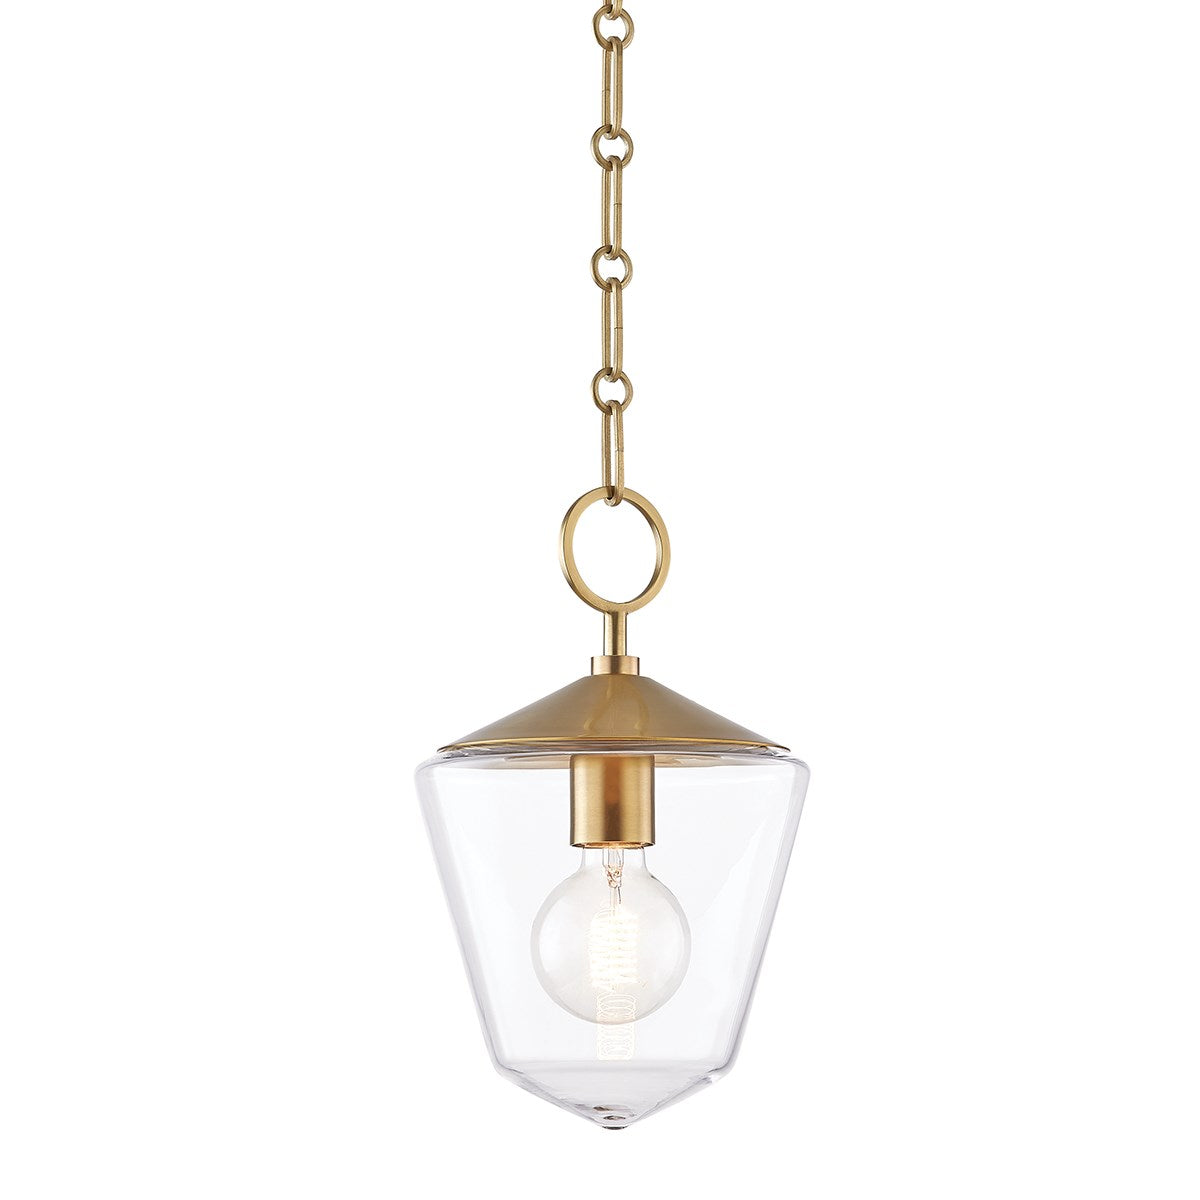 Greene - 1 LIGHT SMALL PENDANT Lantern Hudson Valley Aged Brass  